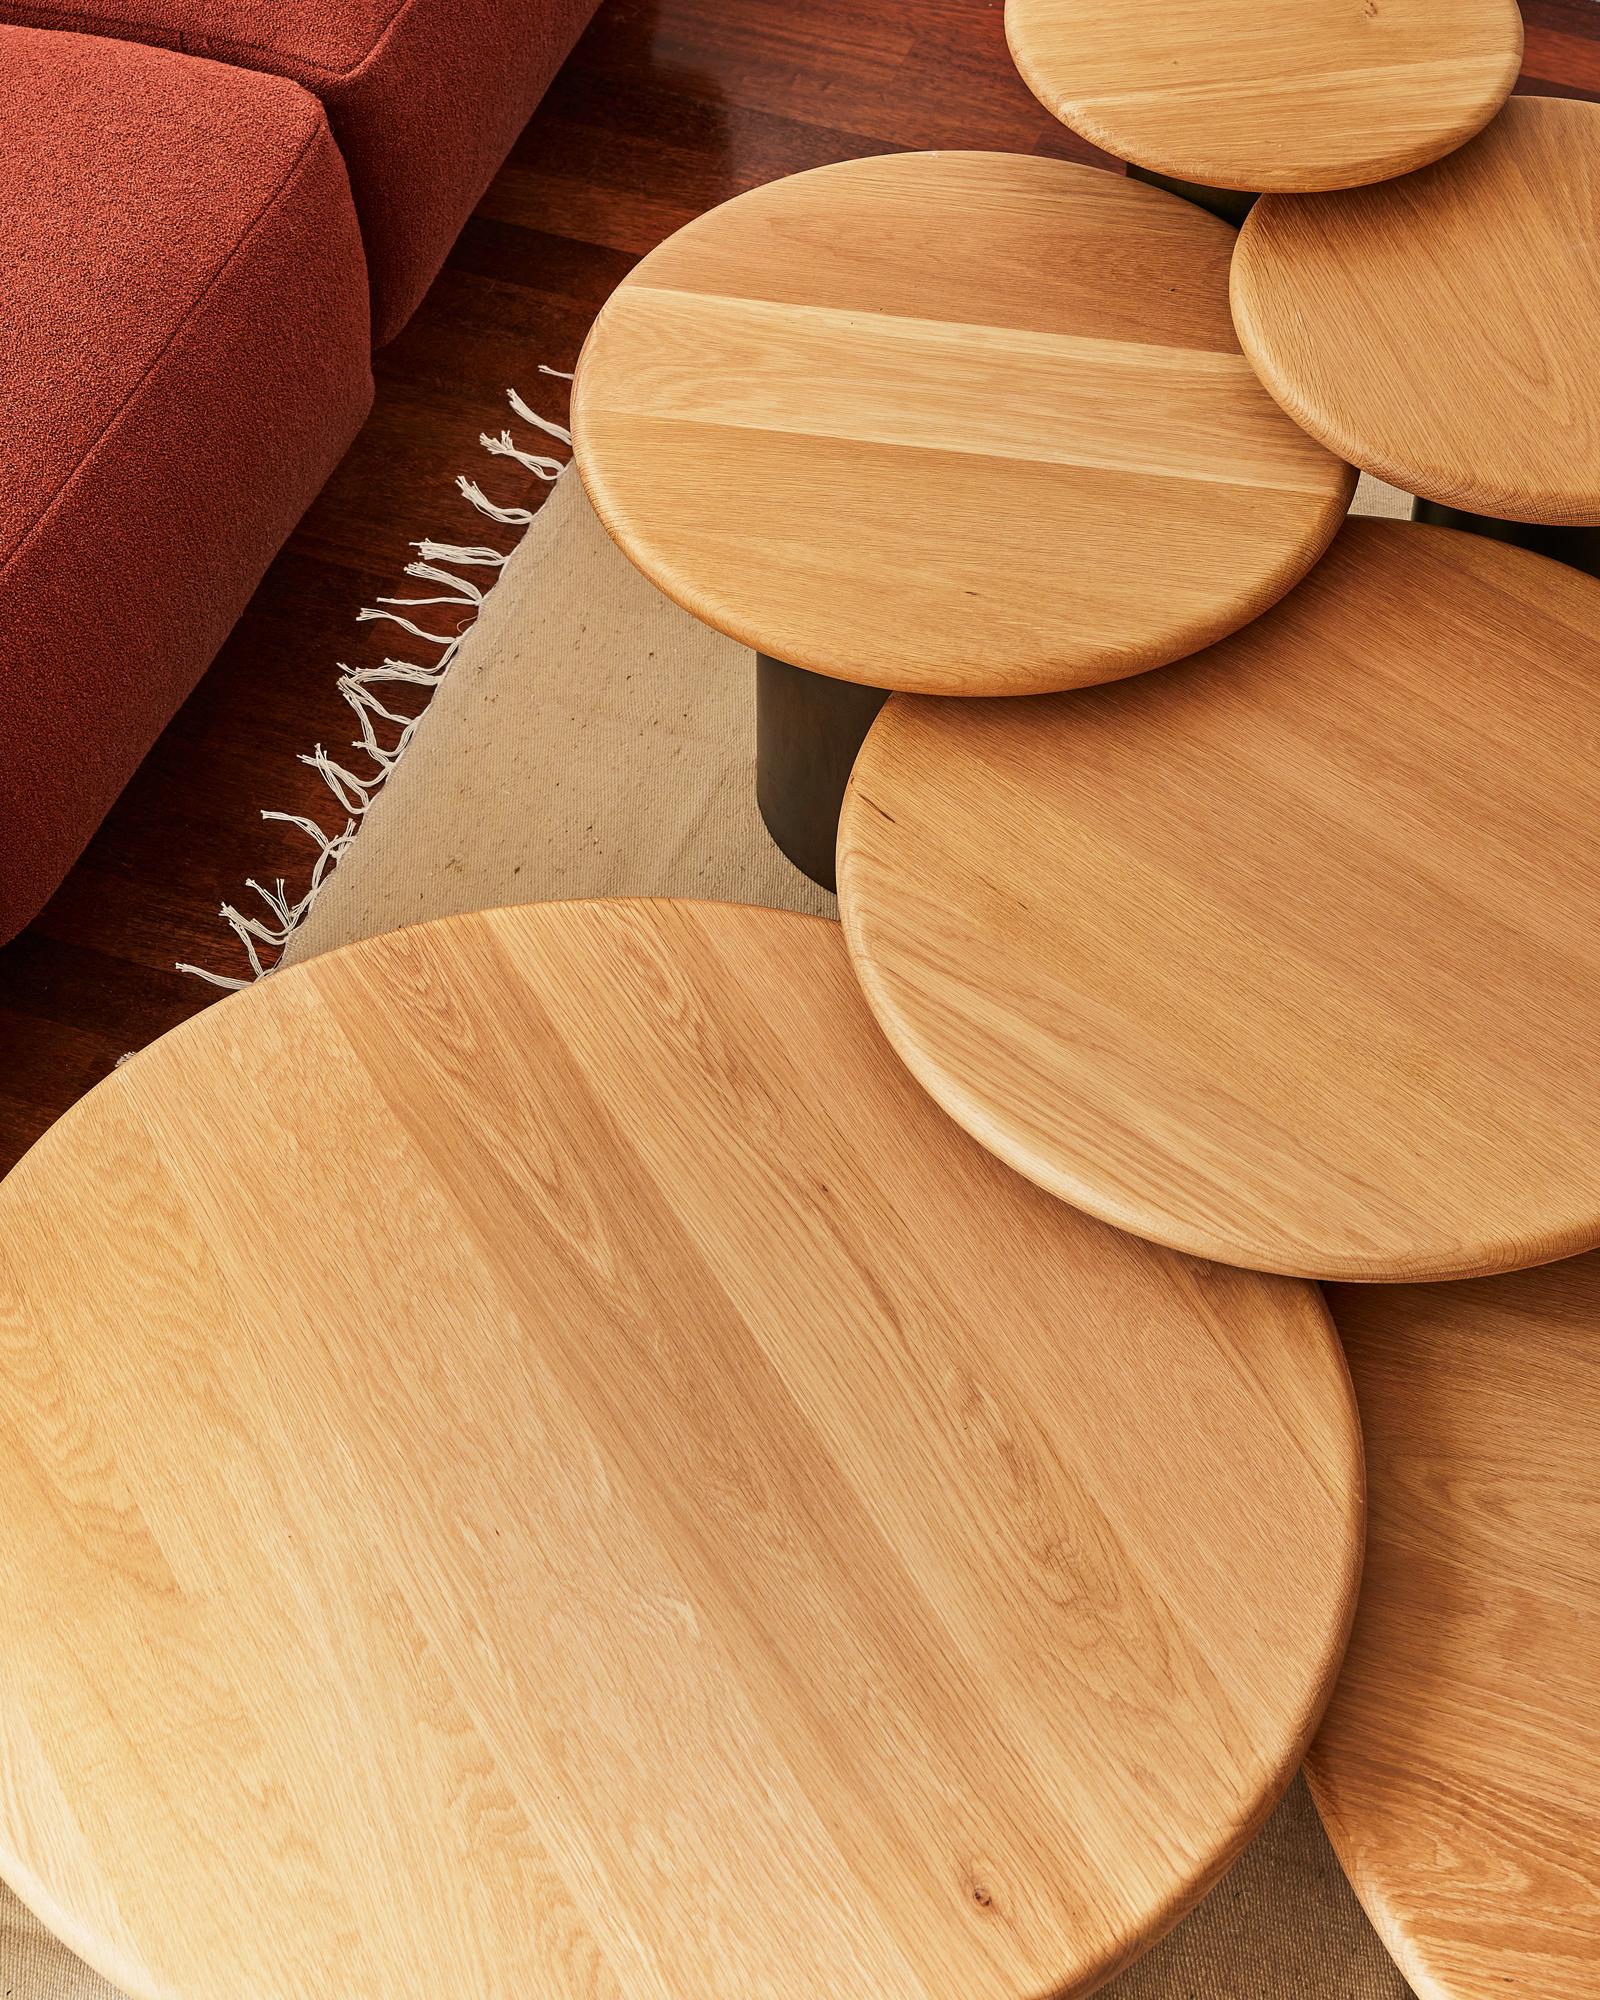 Patinated Raindrop Side Table Set, 300, 400, 500, Microcrete / Oak For Sale